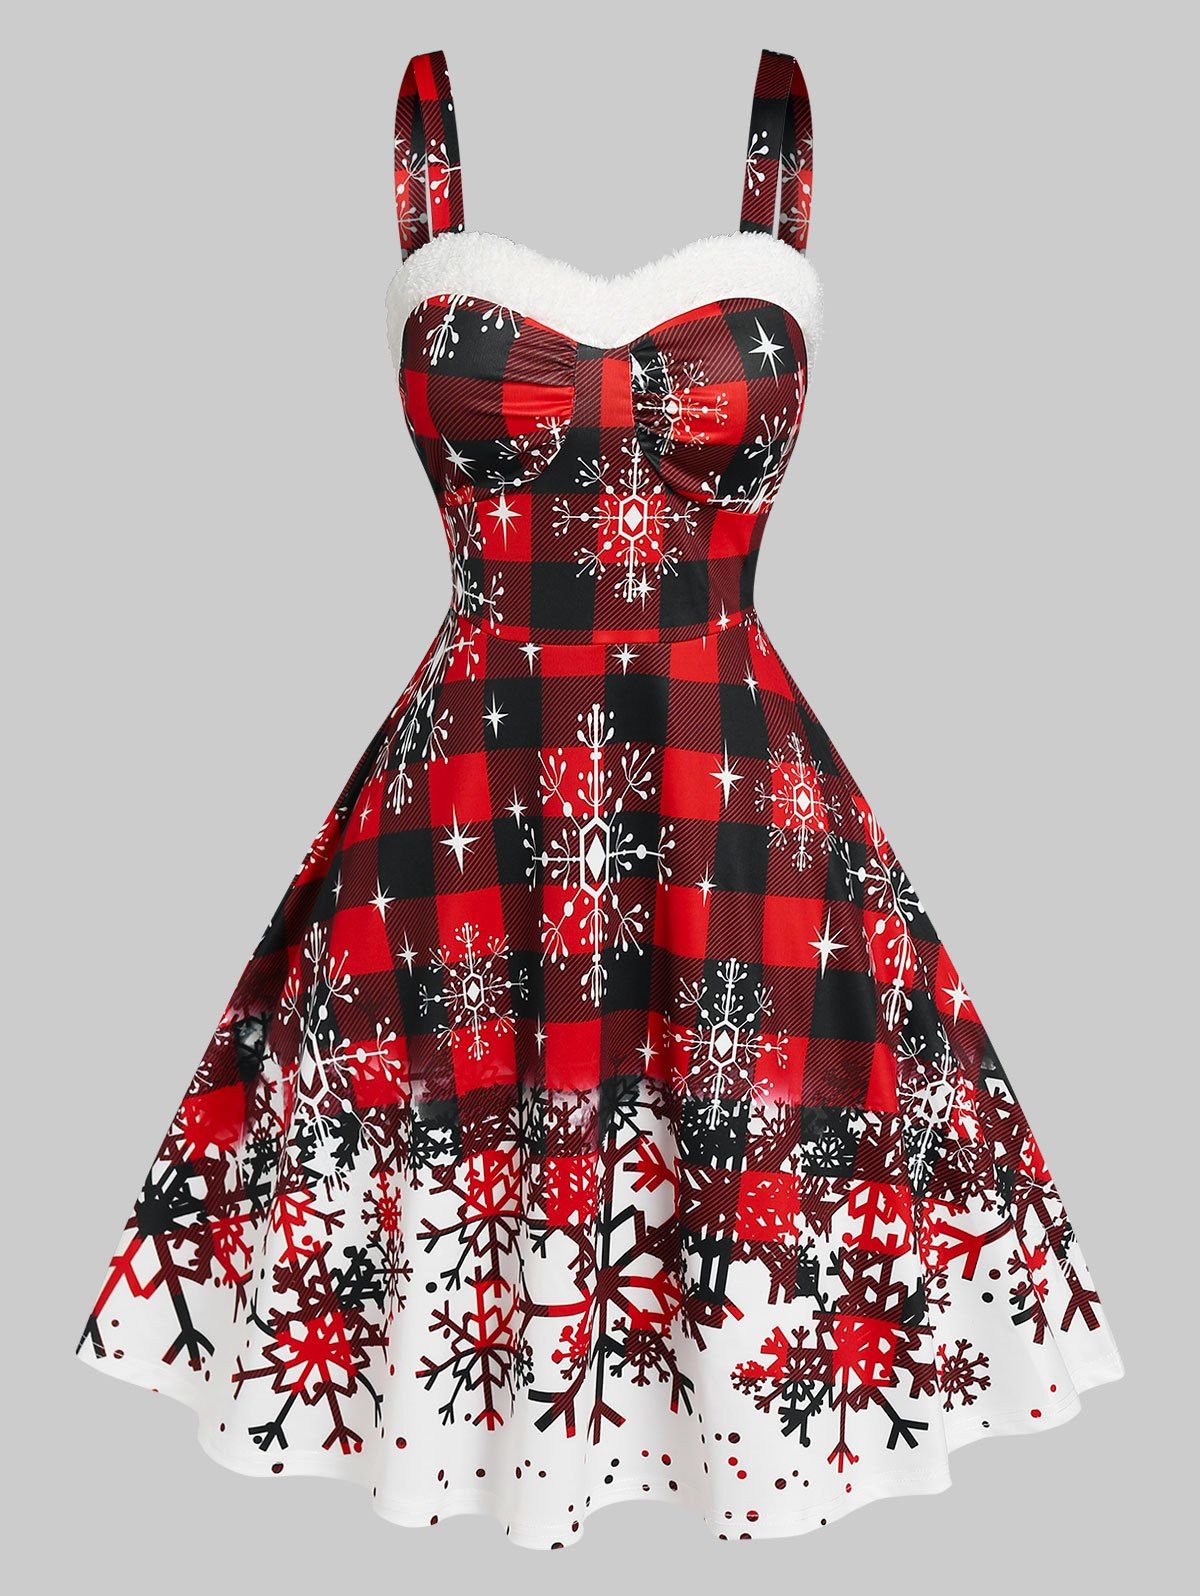 Christmas Party Dress Plaid Snowflake Print Sleeveless Dress - RED S